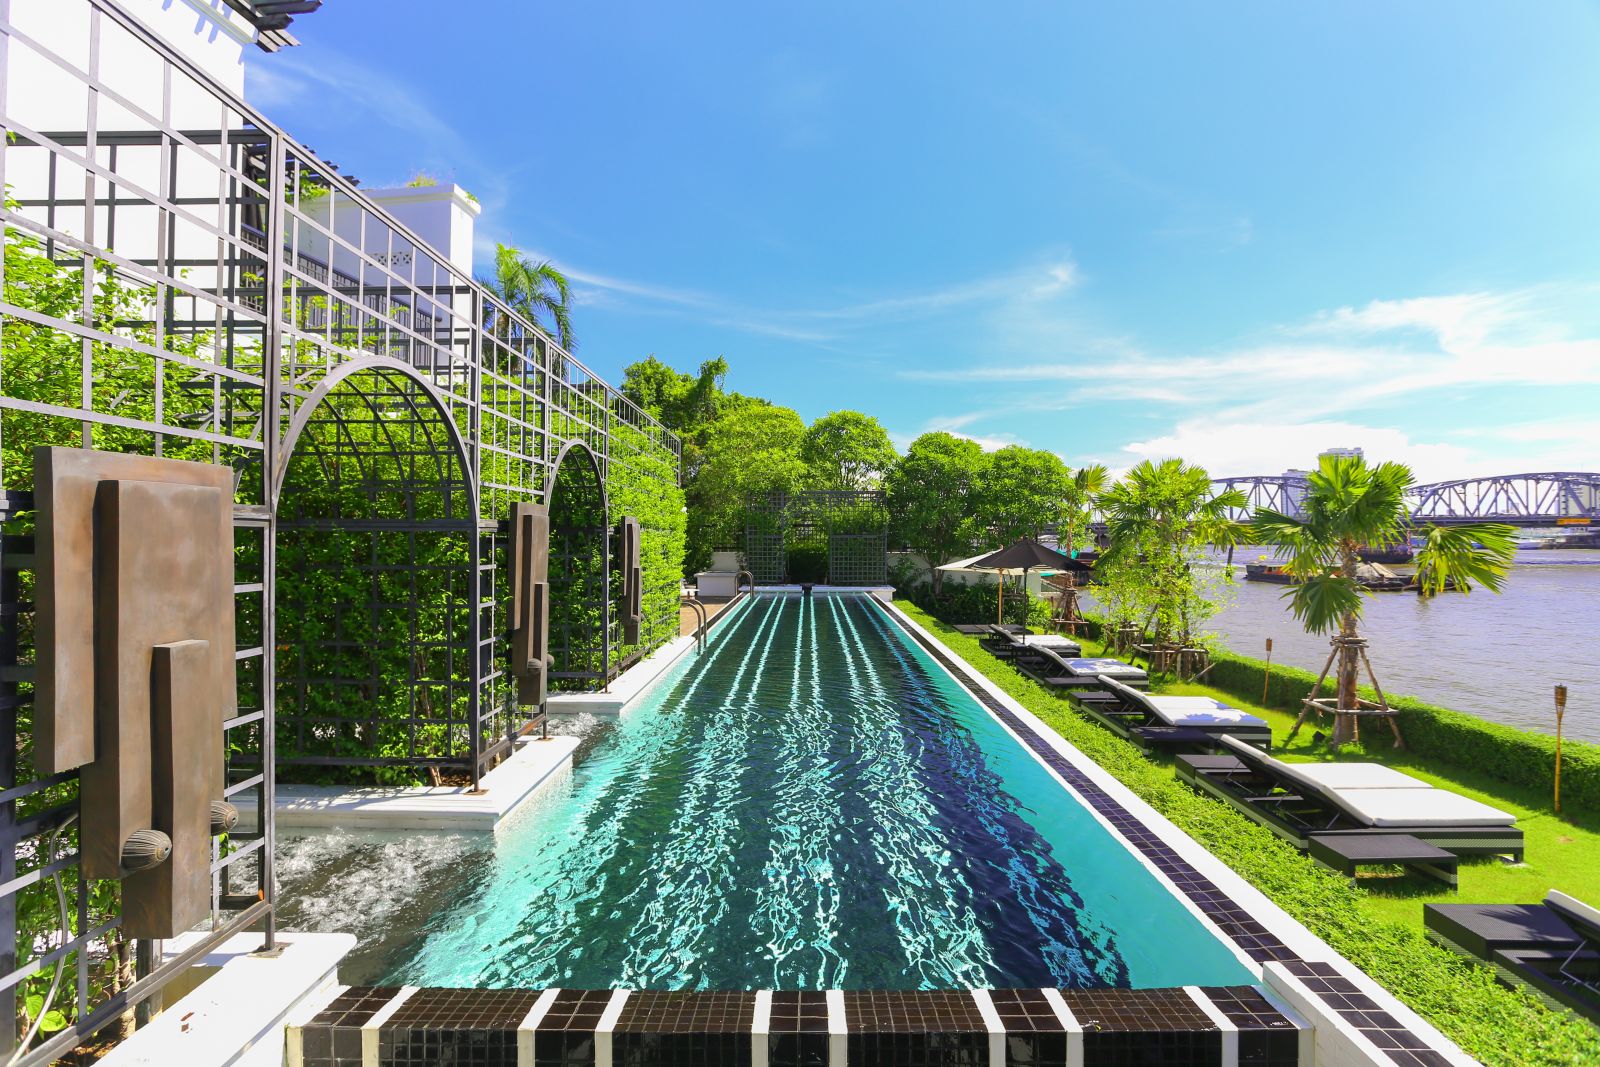 Riverside swimming pool at the Siam Hotel in Bangkok